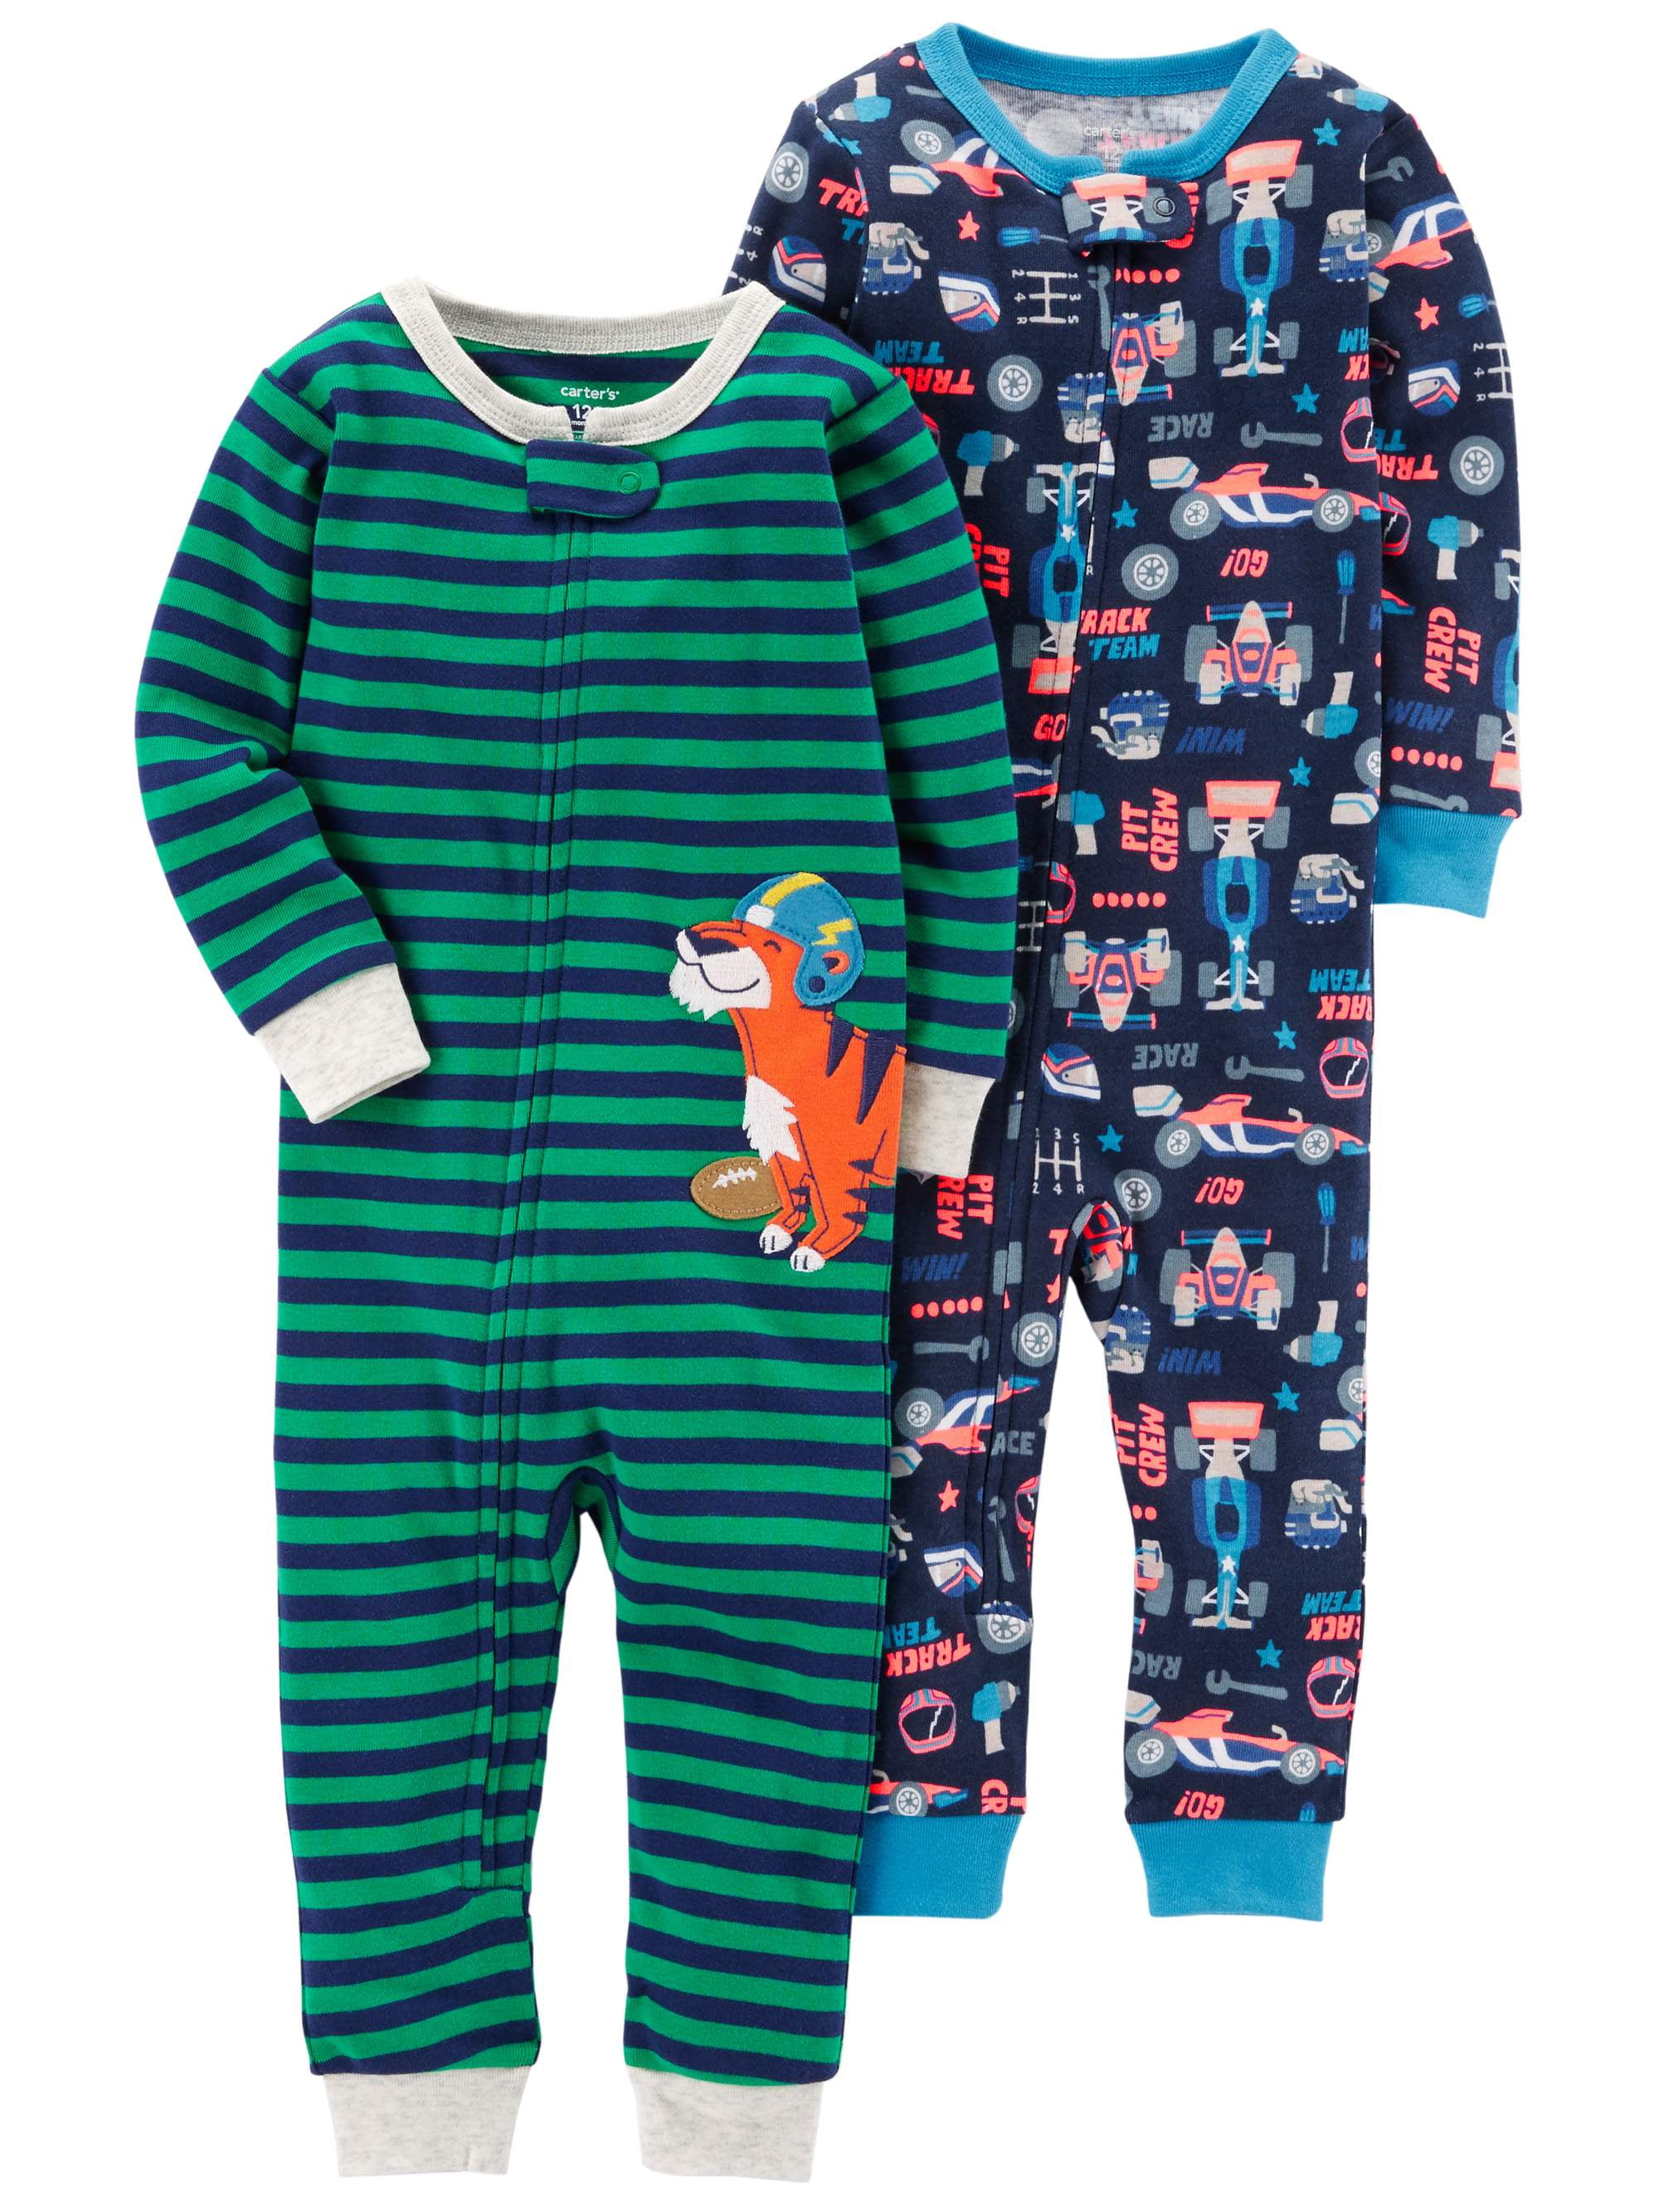 Carter's Carter's Baby Toddler Boy Snug Fit Cotton Footless OnePiece Pajamas, 2Pack